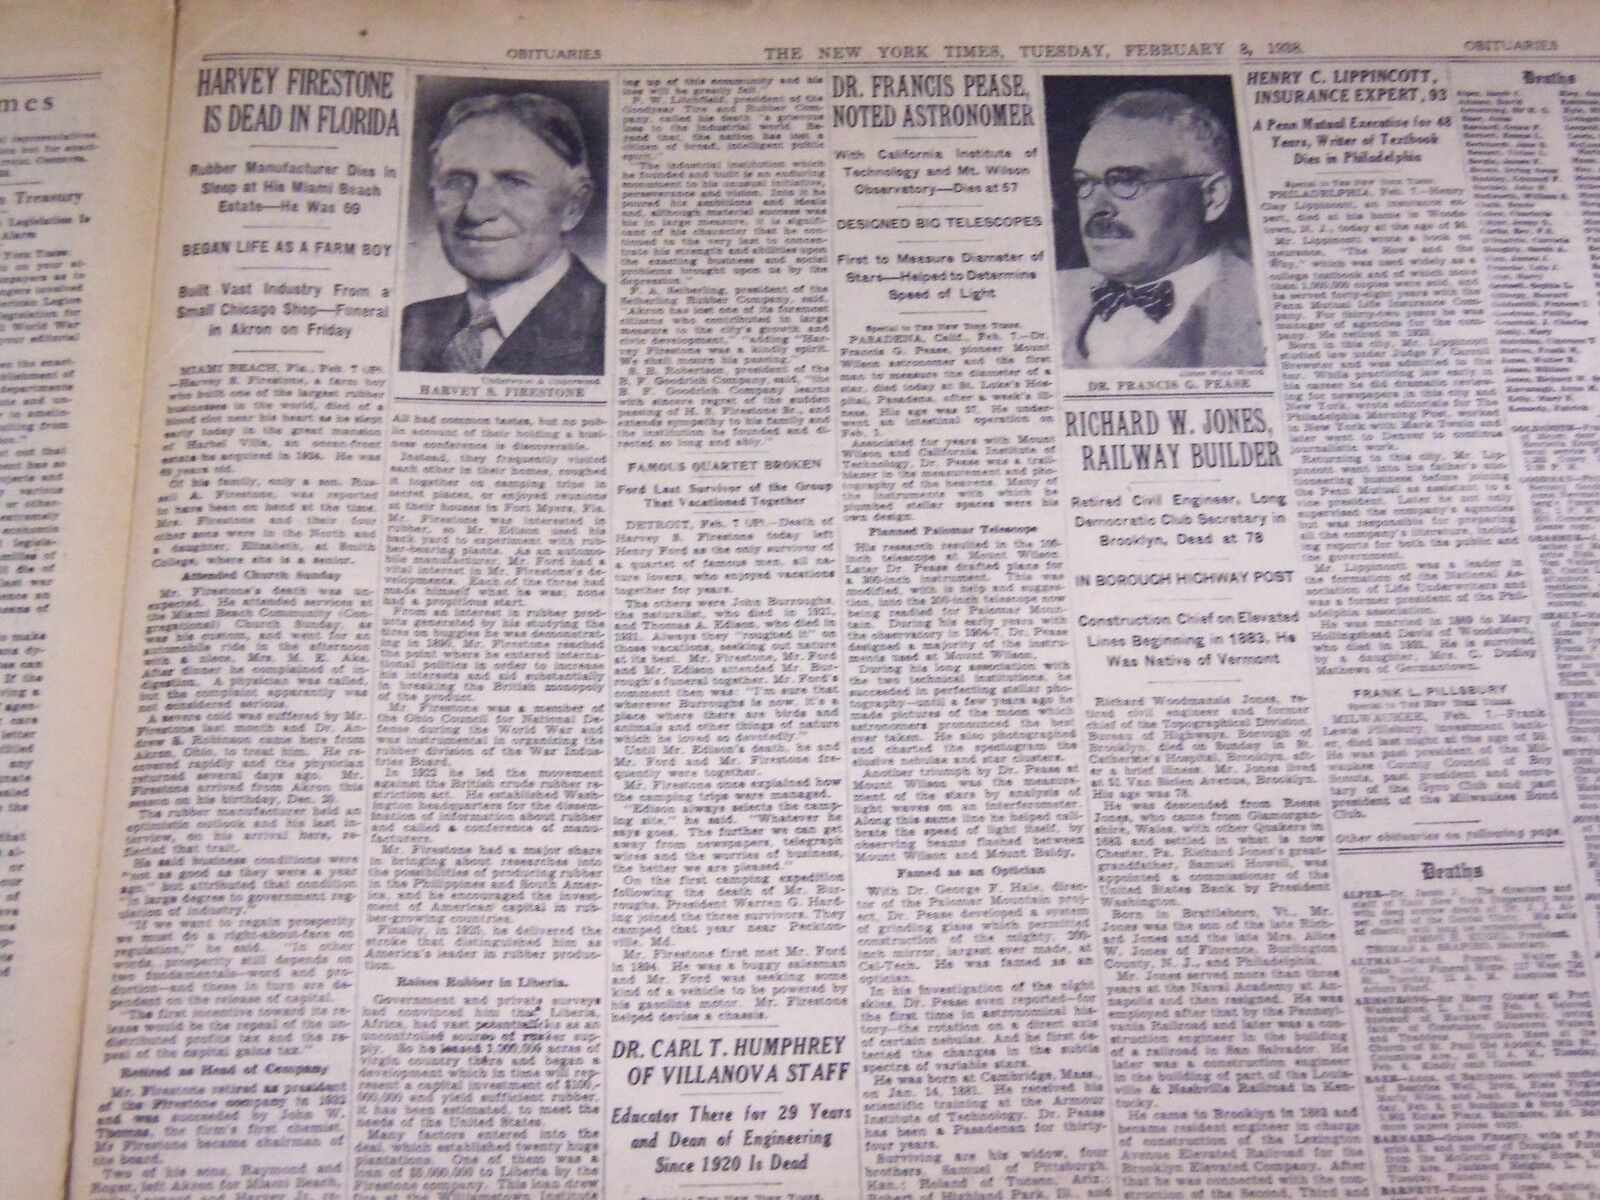 1938 FEBRUARY 8 NEW YORK TIMES - HARVEY FIRESTONE DEAD AT 69 - NT 3121